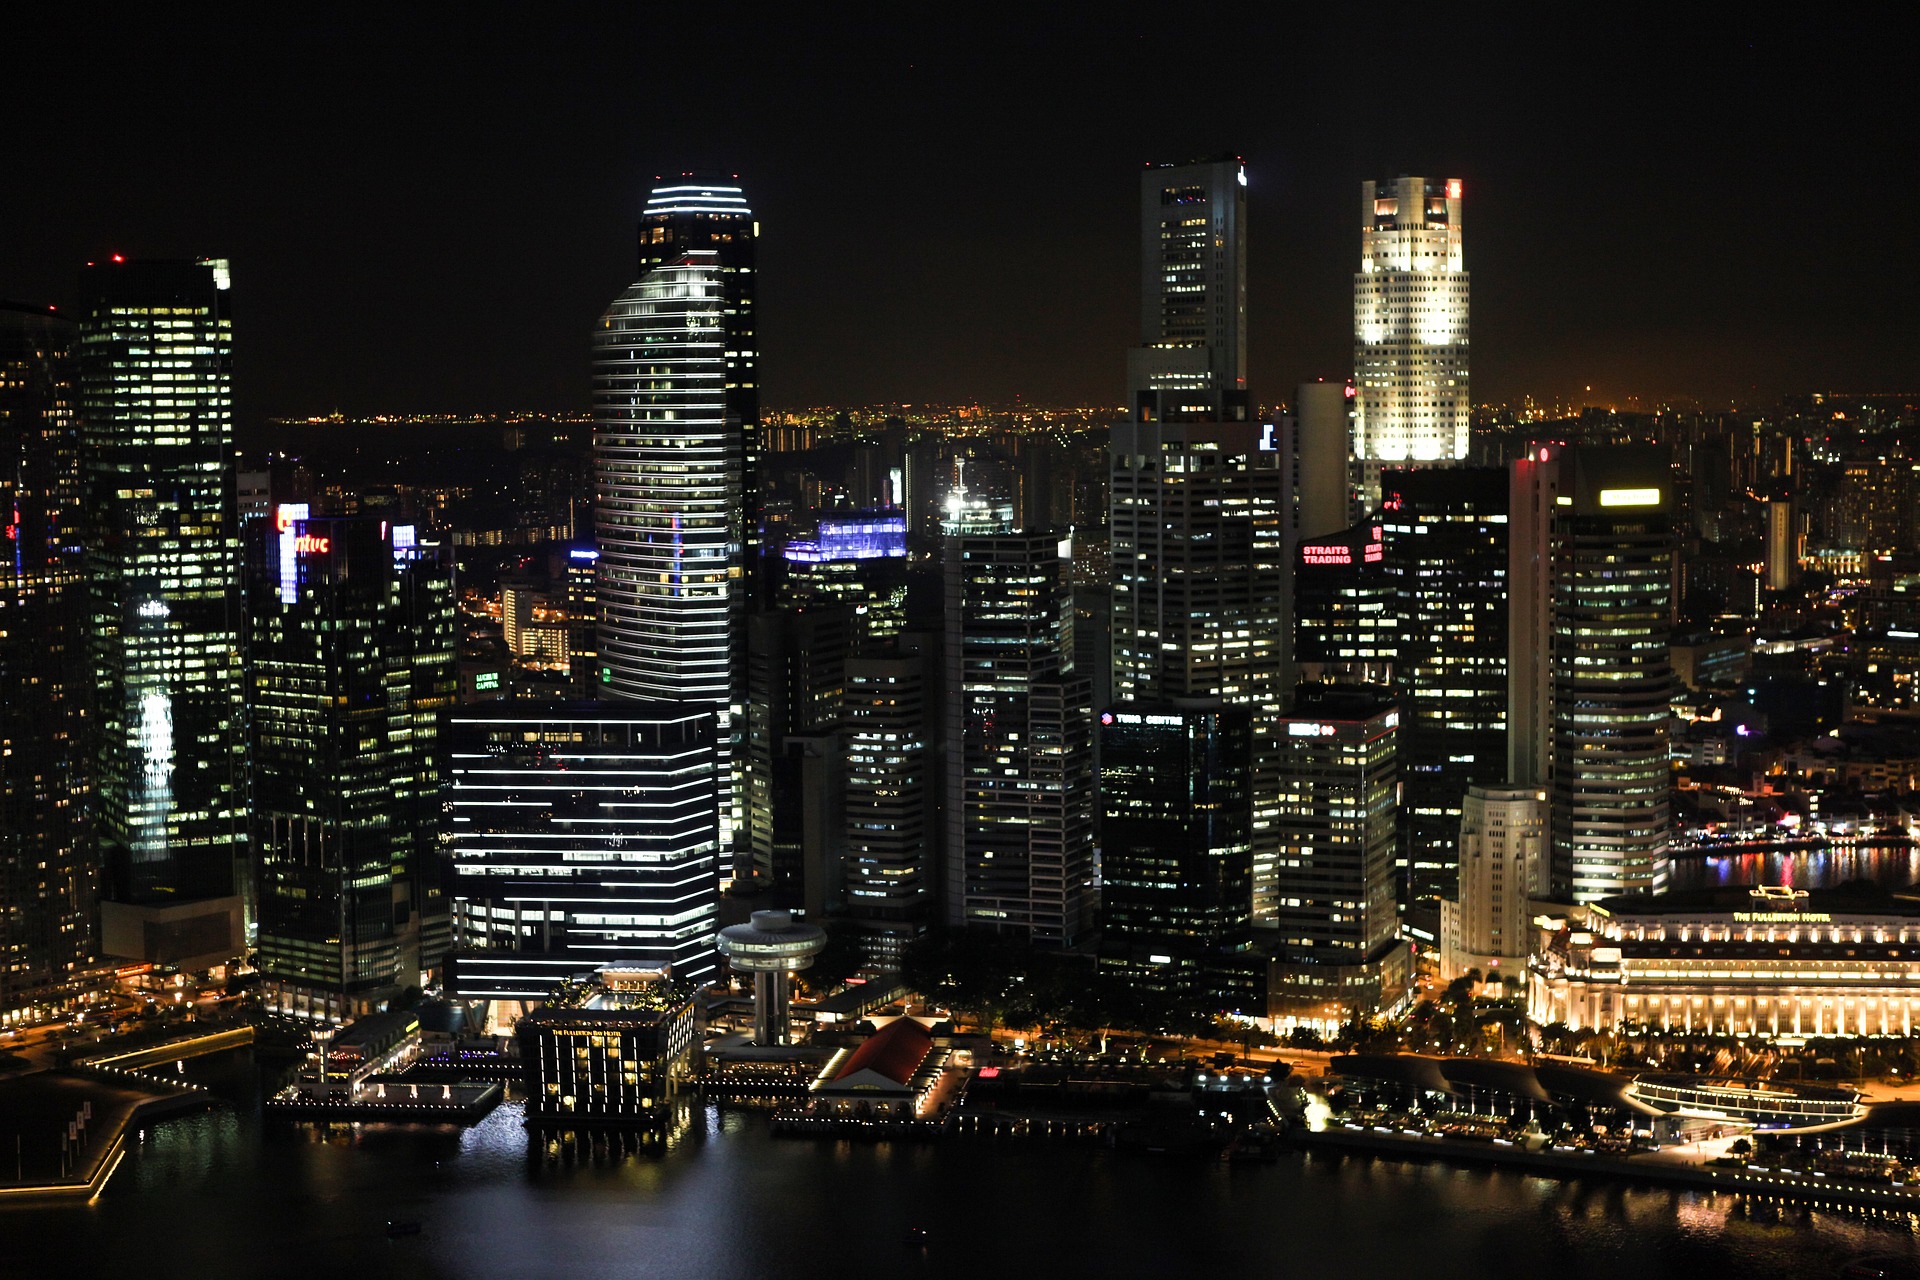 Singapore Mandatory Tax Registrations